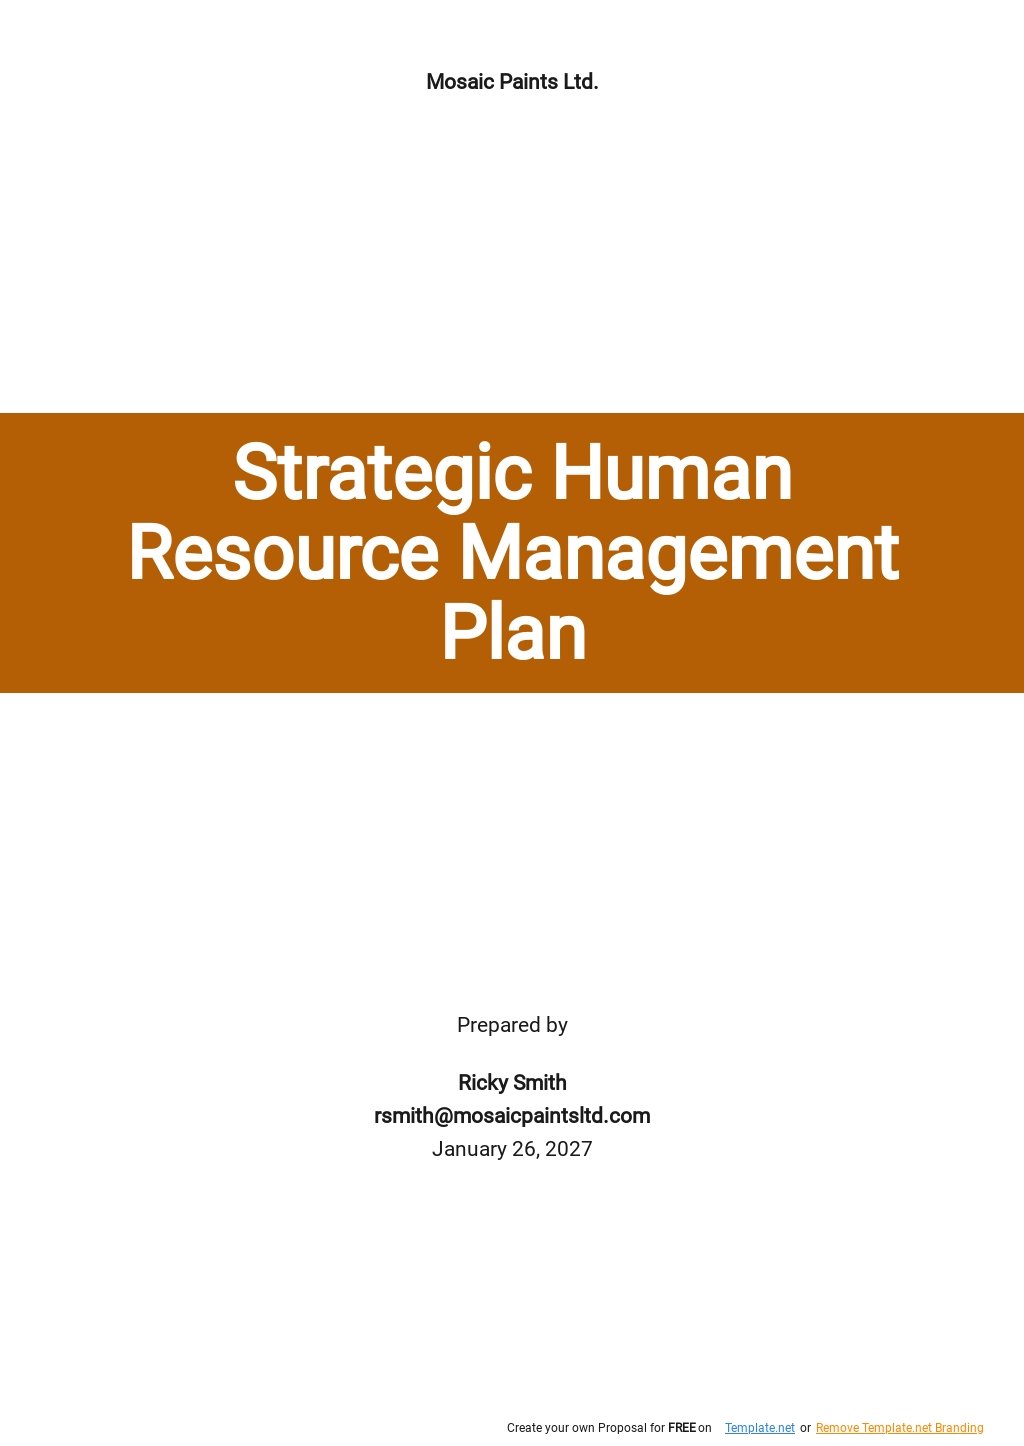 Strategic Human Resource Management Plan Template